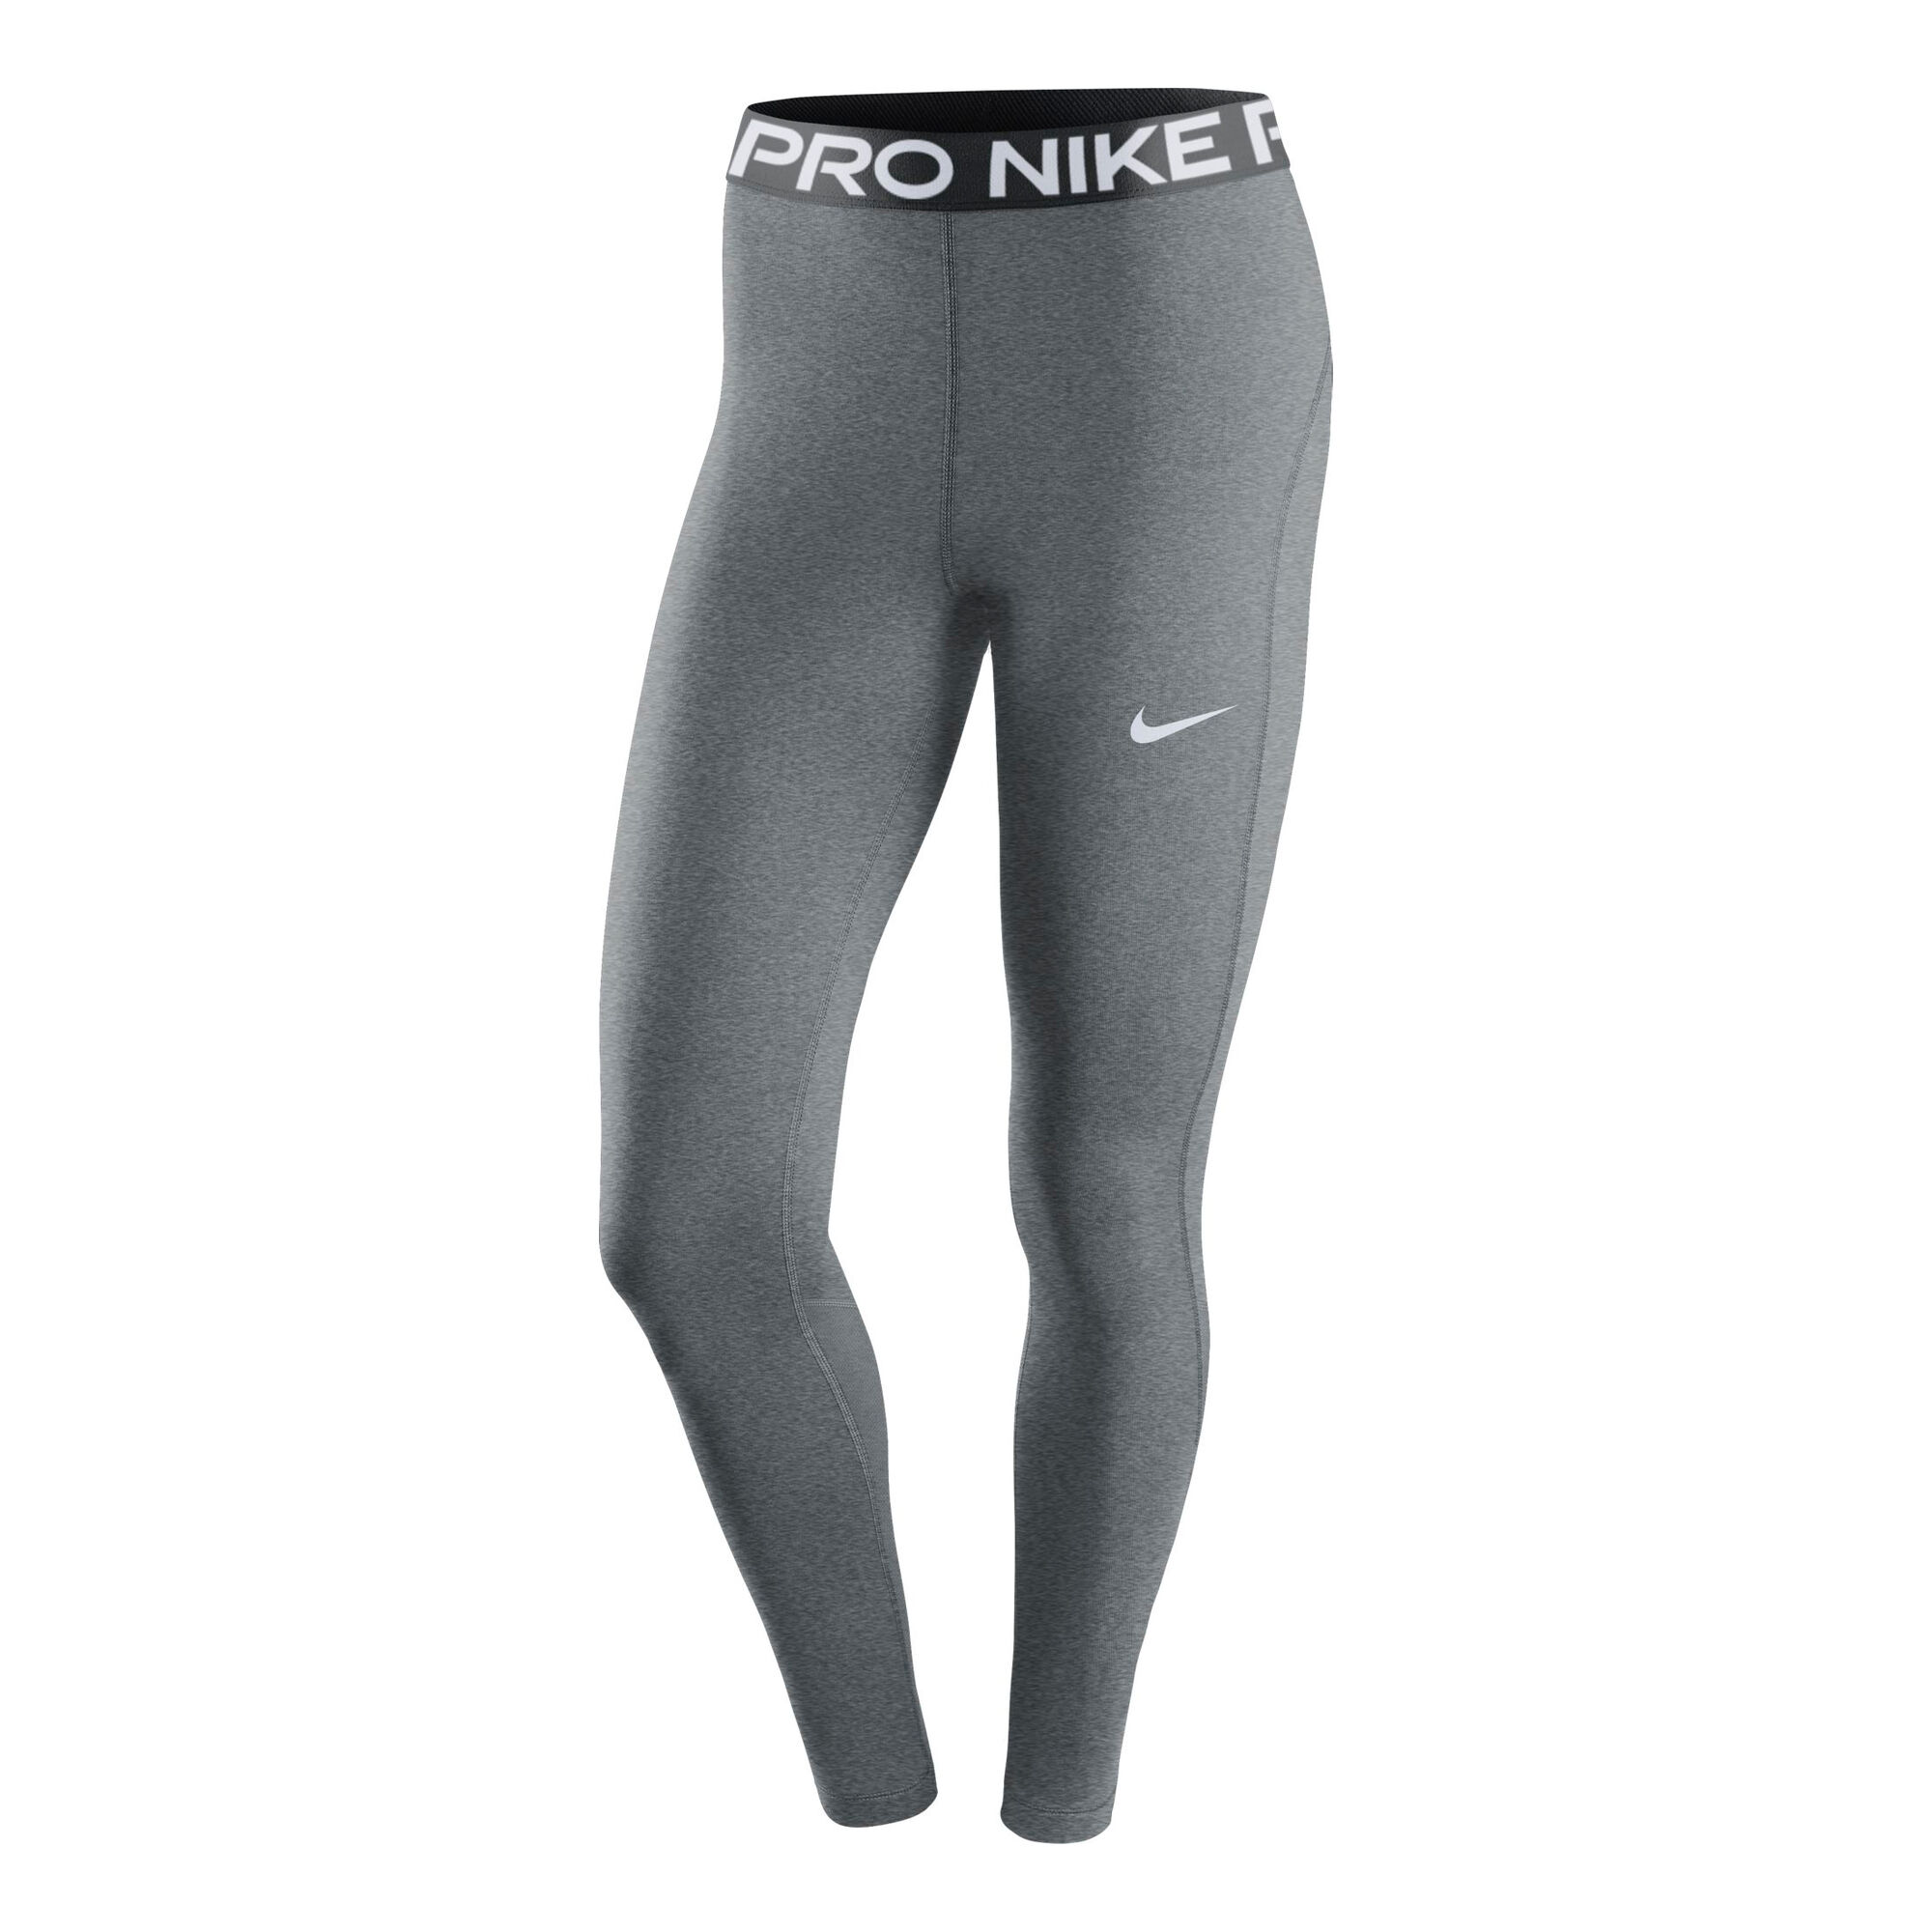 Buy Nike Pro 365 Tight Women Grey, Black online